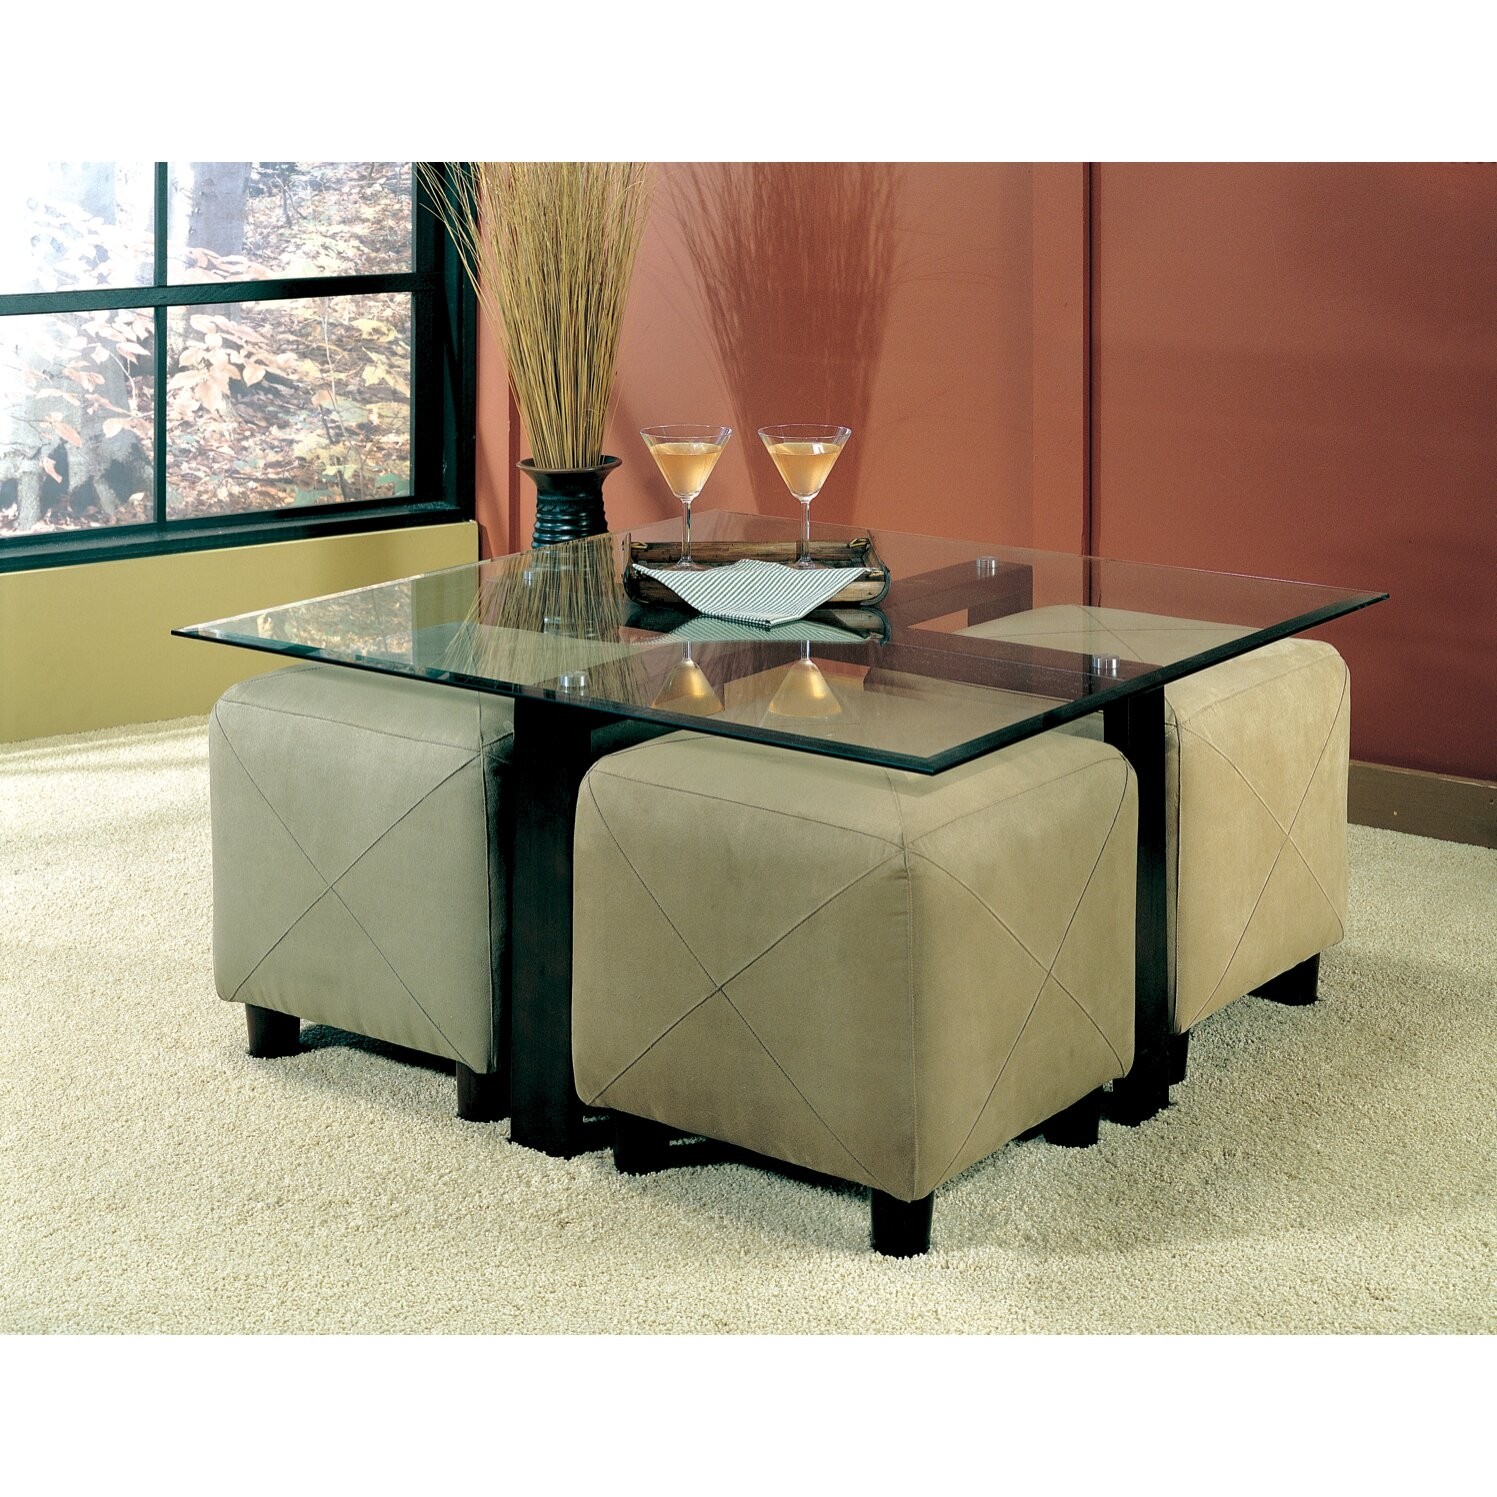 Modern Design Heartlands 3 Piece Glass Nesting Tables Strengthened Tempered Glass Top Chrome Base Legs 